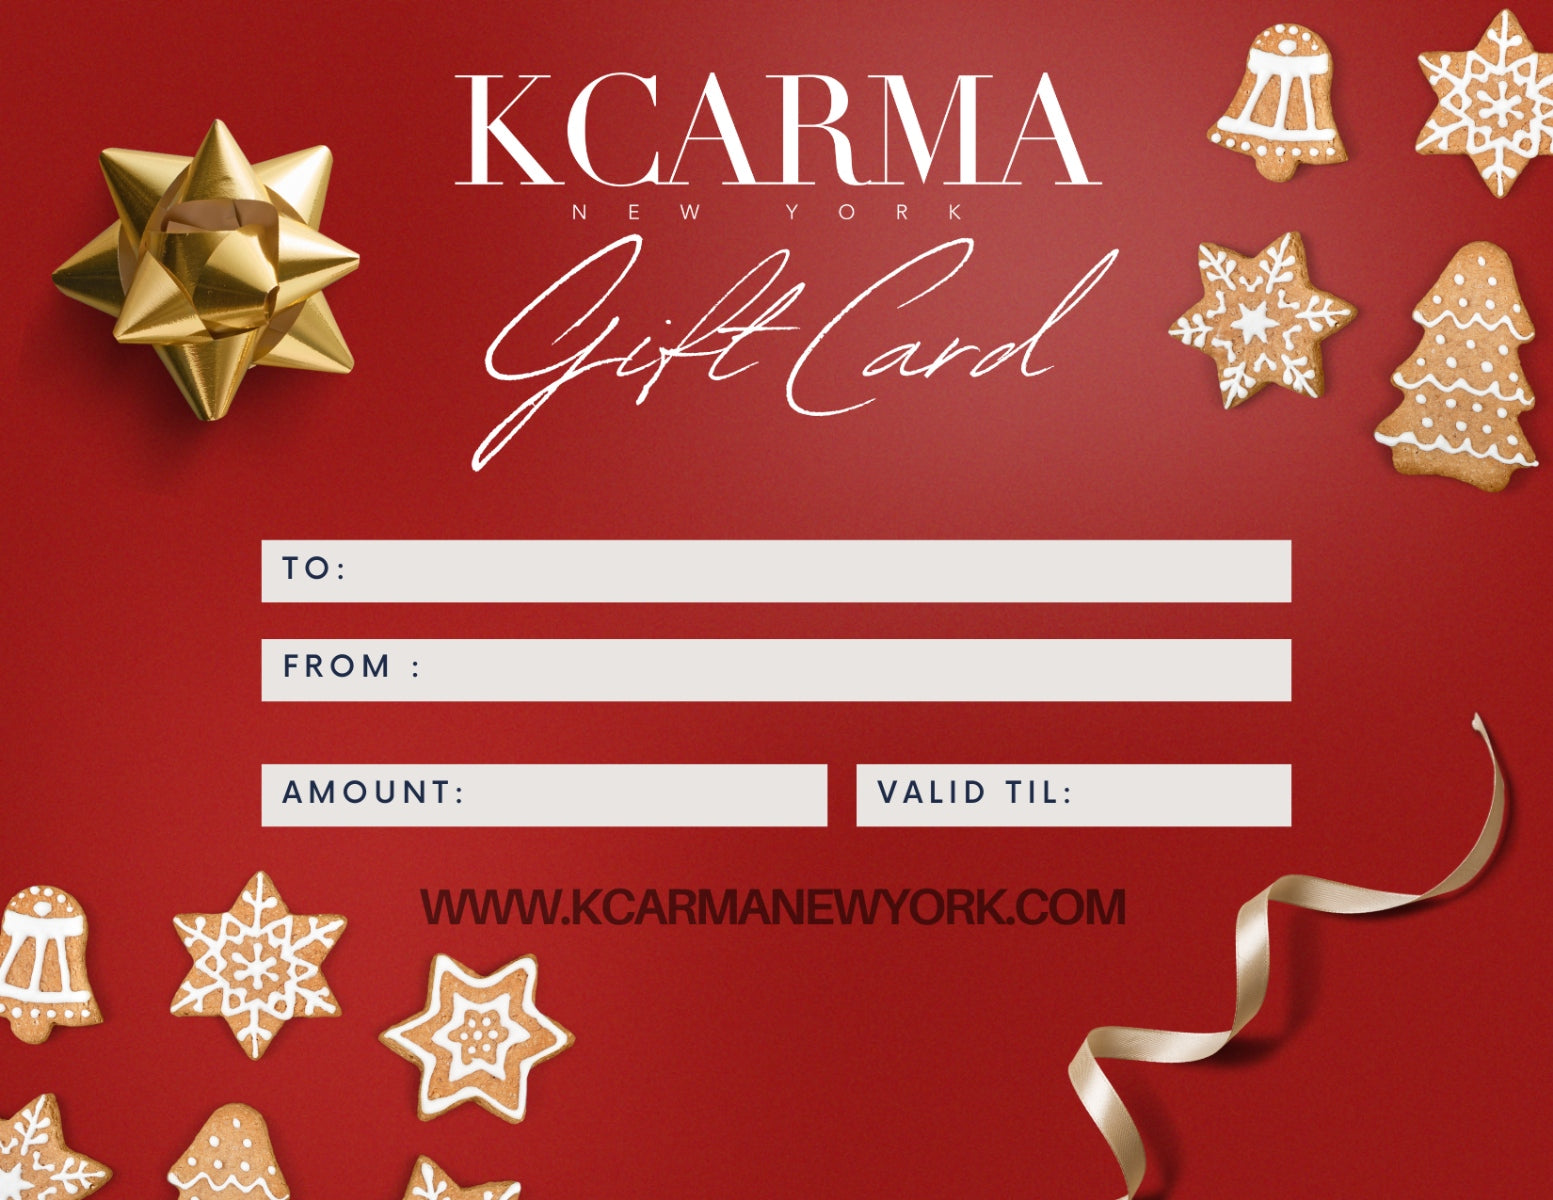 KCARMA eGift Card